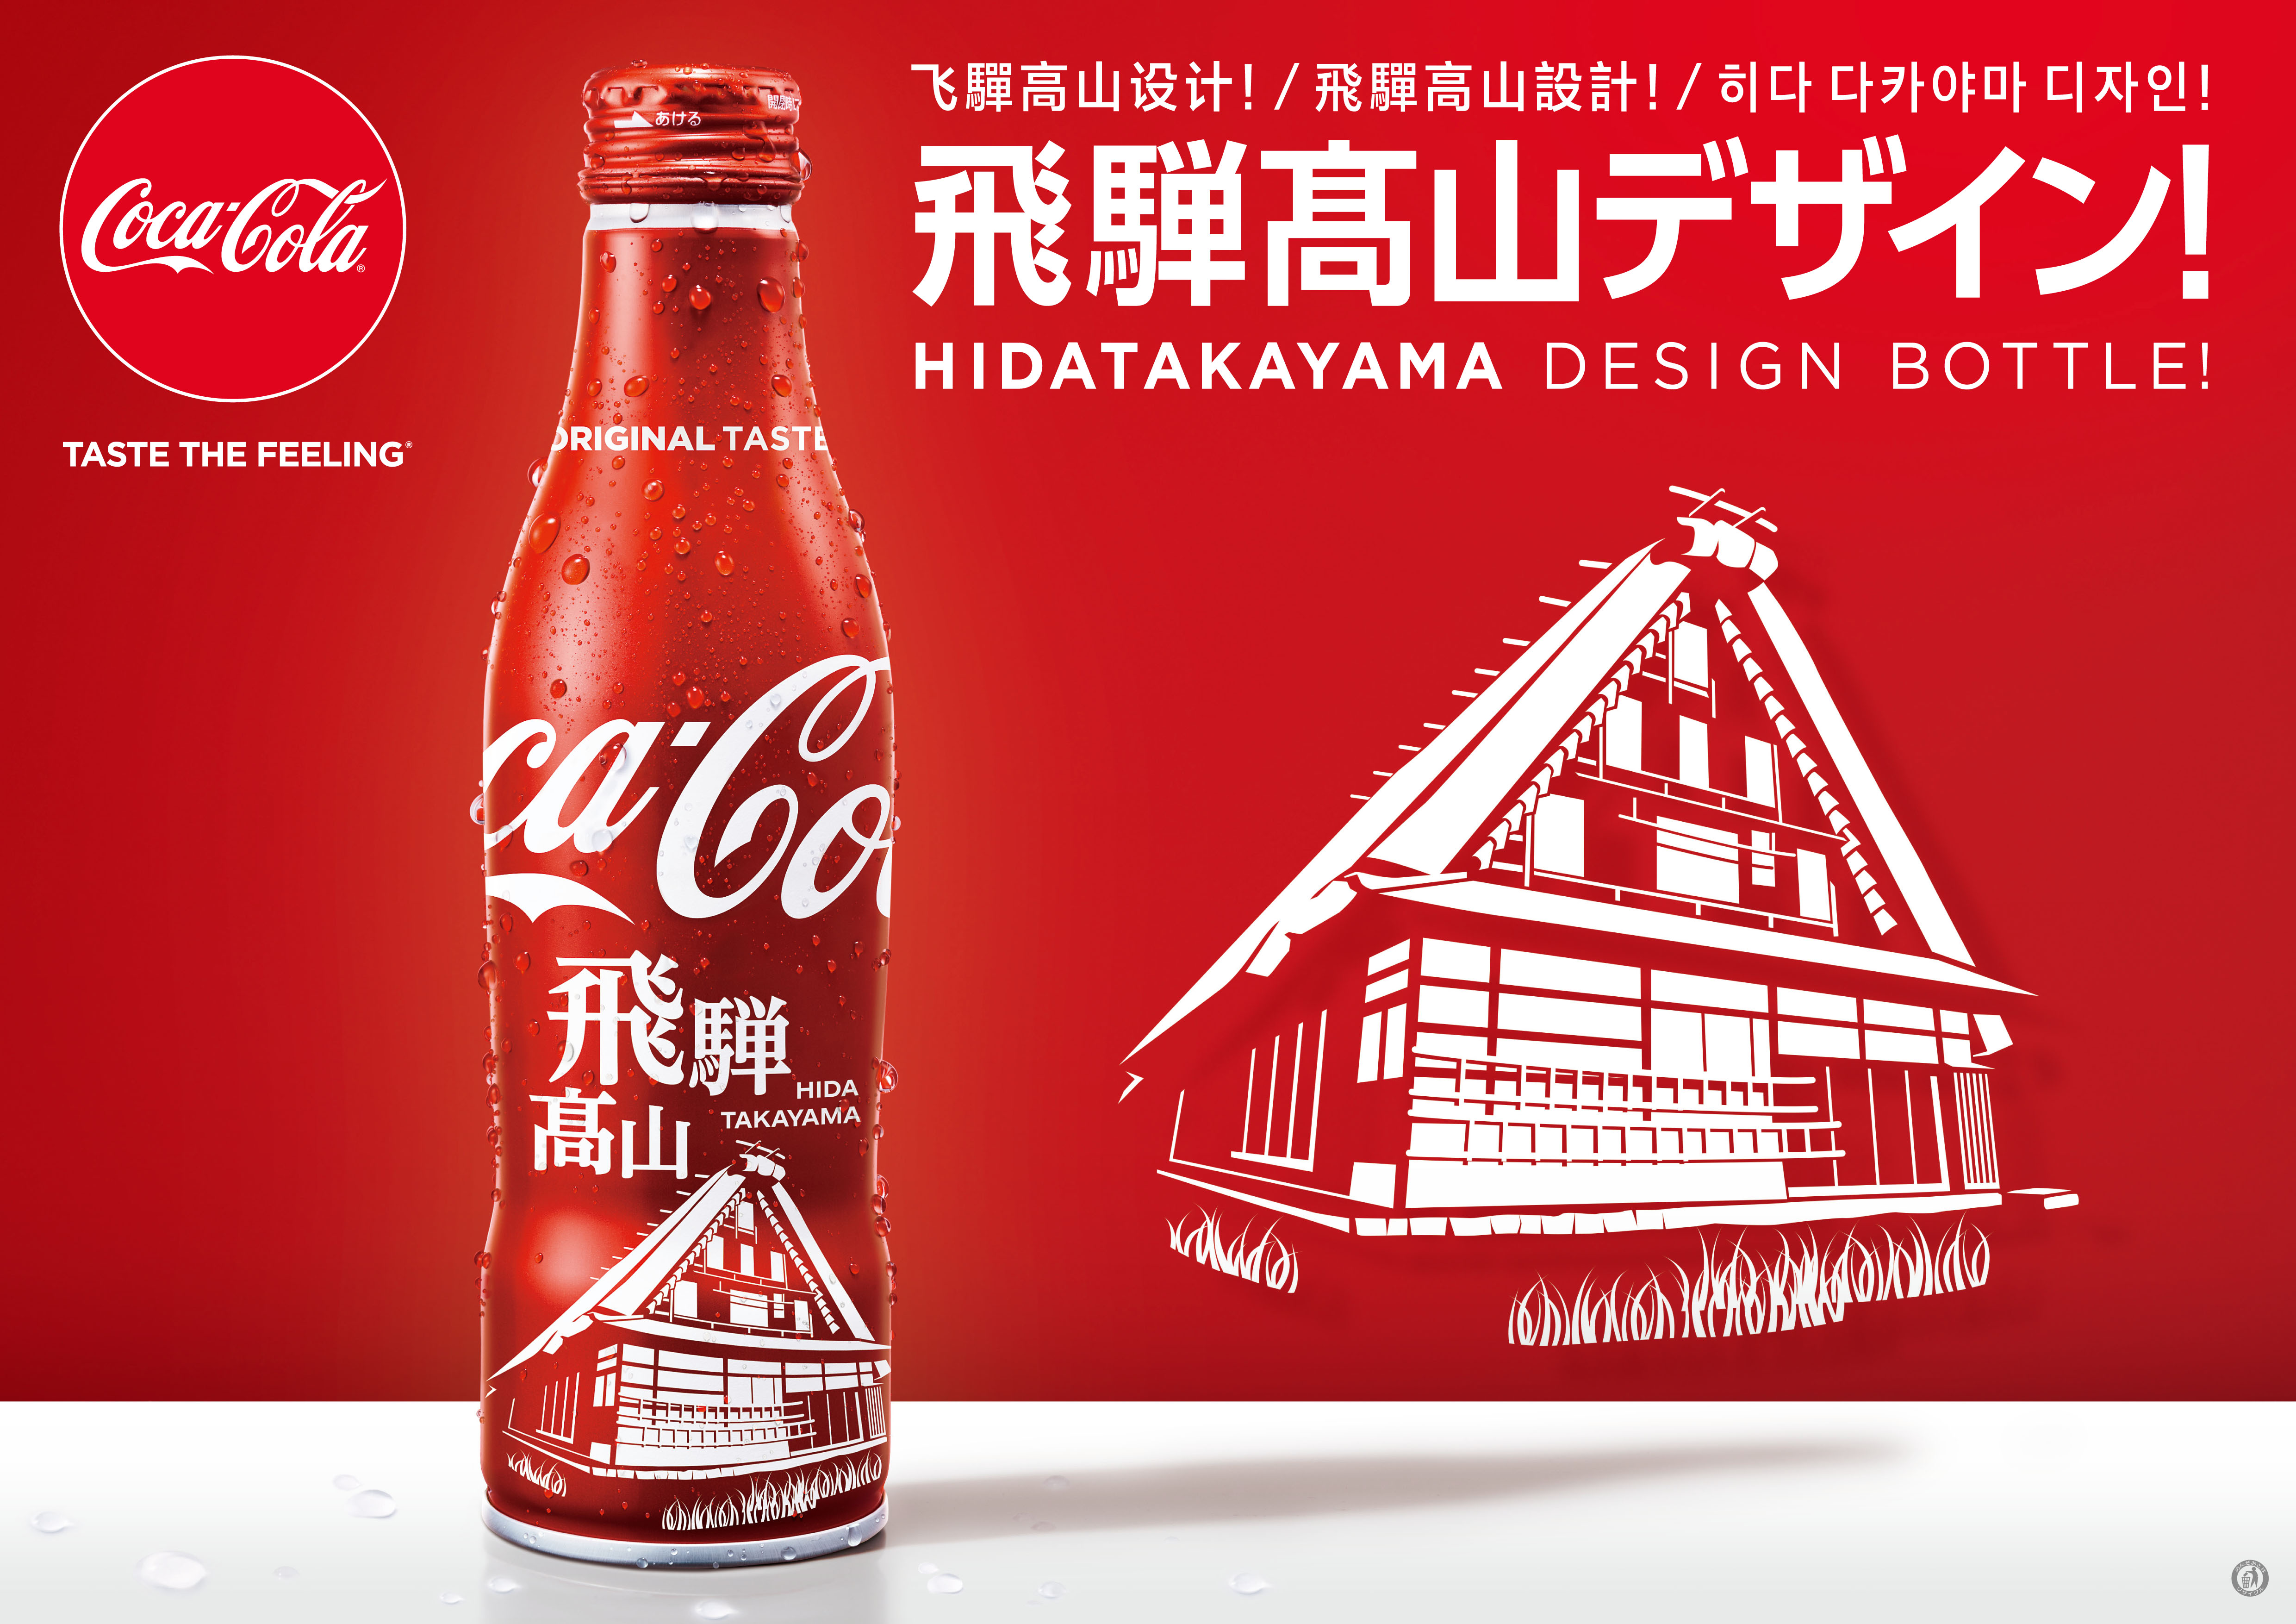 new china coca cola japan 2020 Tokyo Olympics bottle opener 